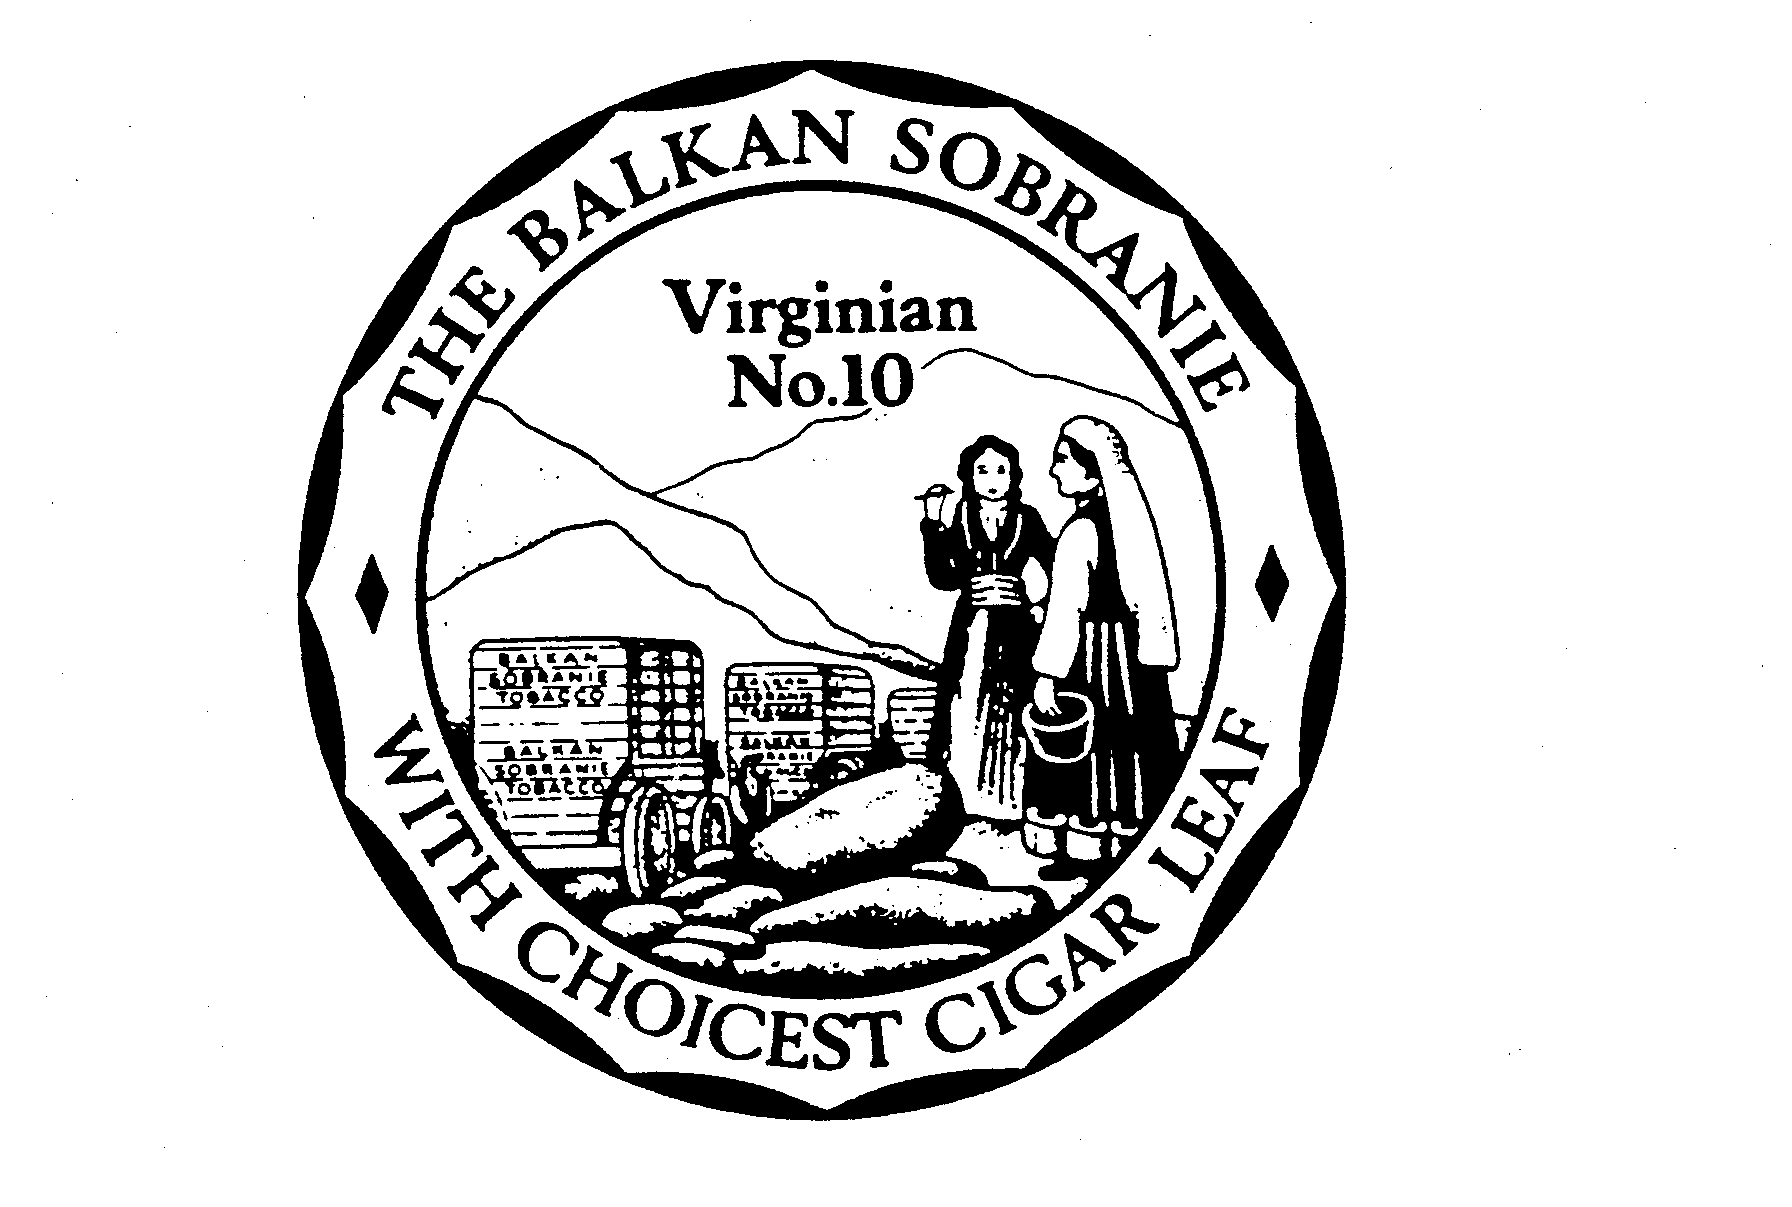  THE BALKAN SOBRANIE WITH CHOICEST CIGAR LEAF VIRGINIAN NO.10